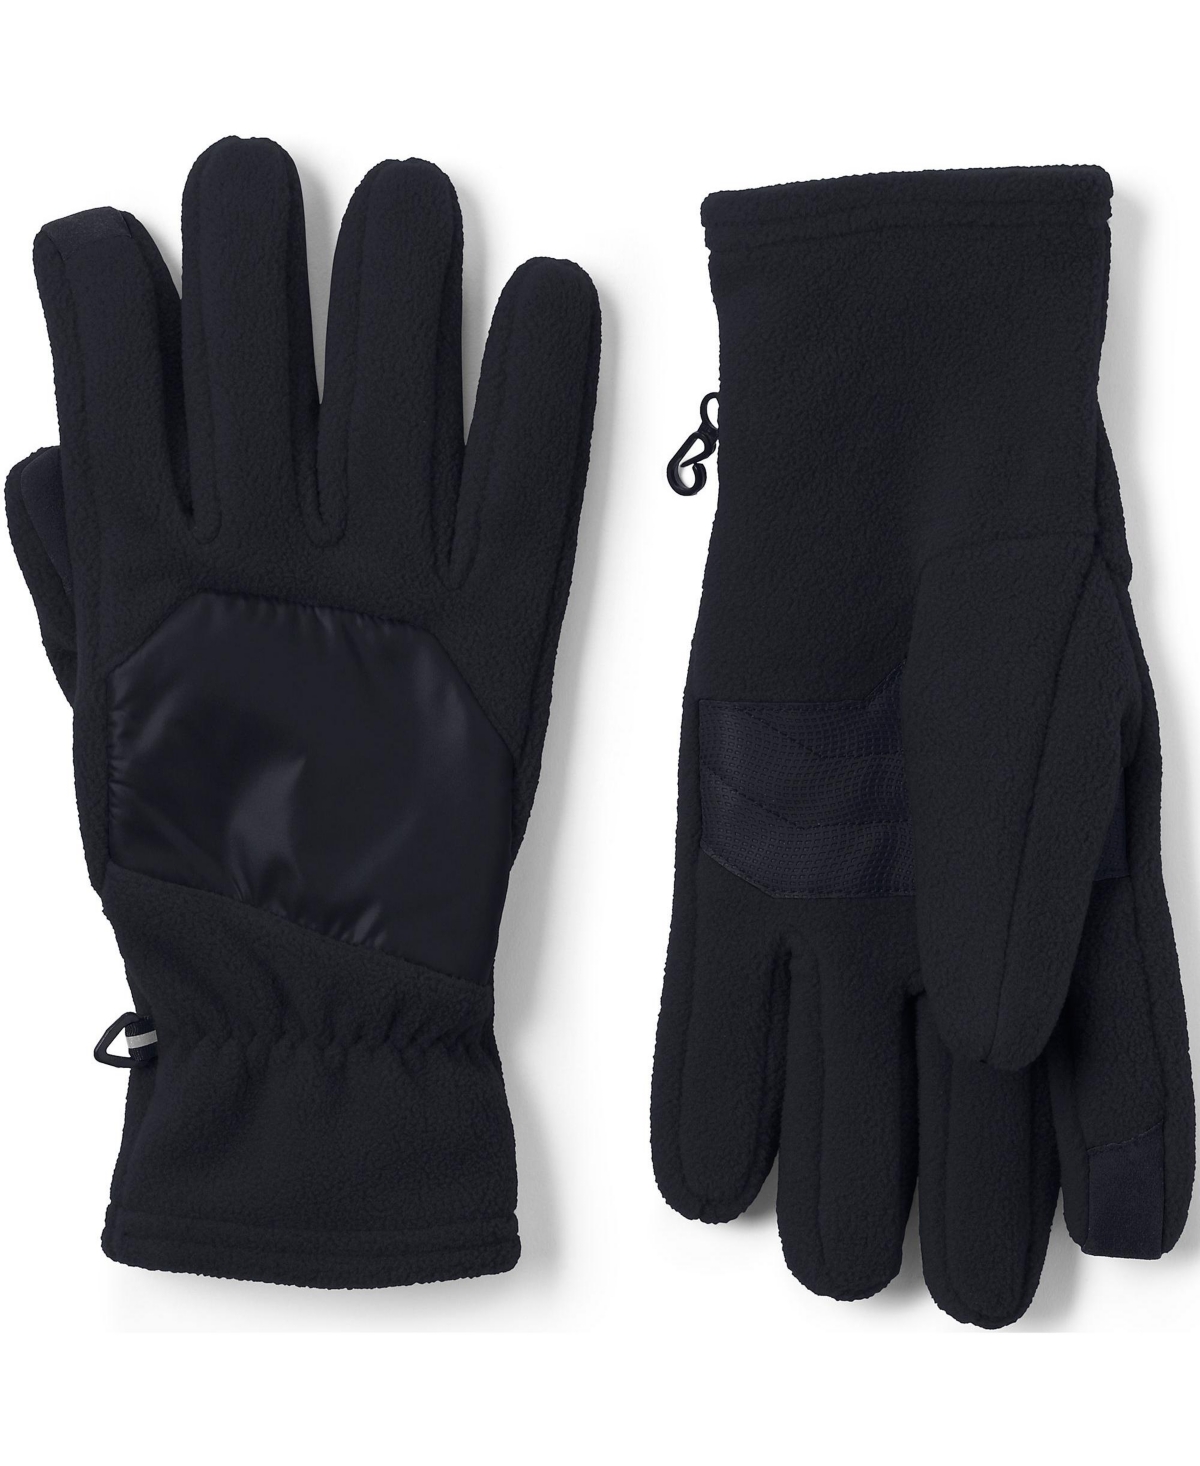 Men's T200 Fleece Ez Touch Gloves - Radiant navy